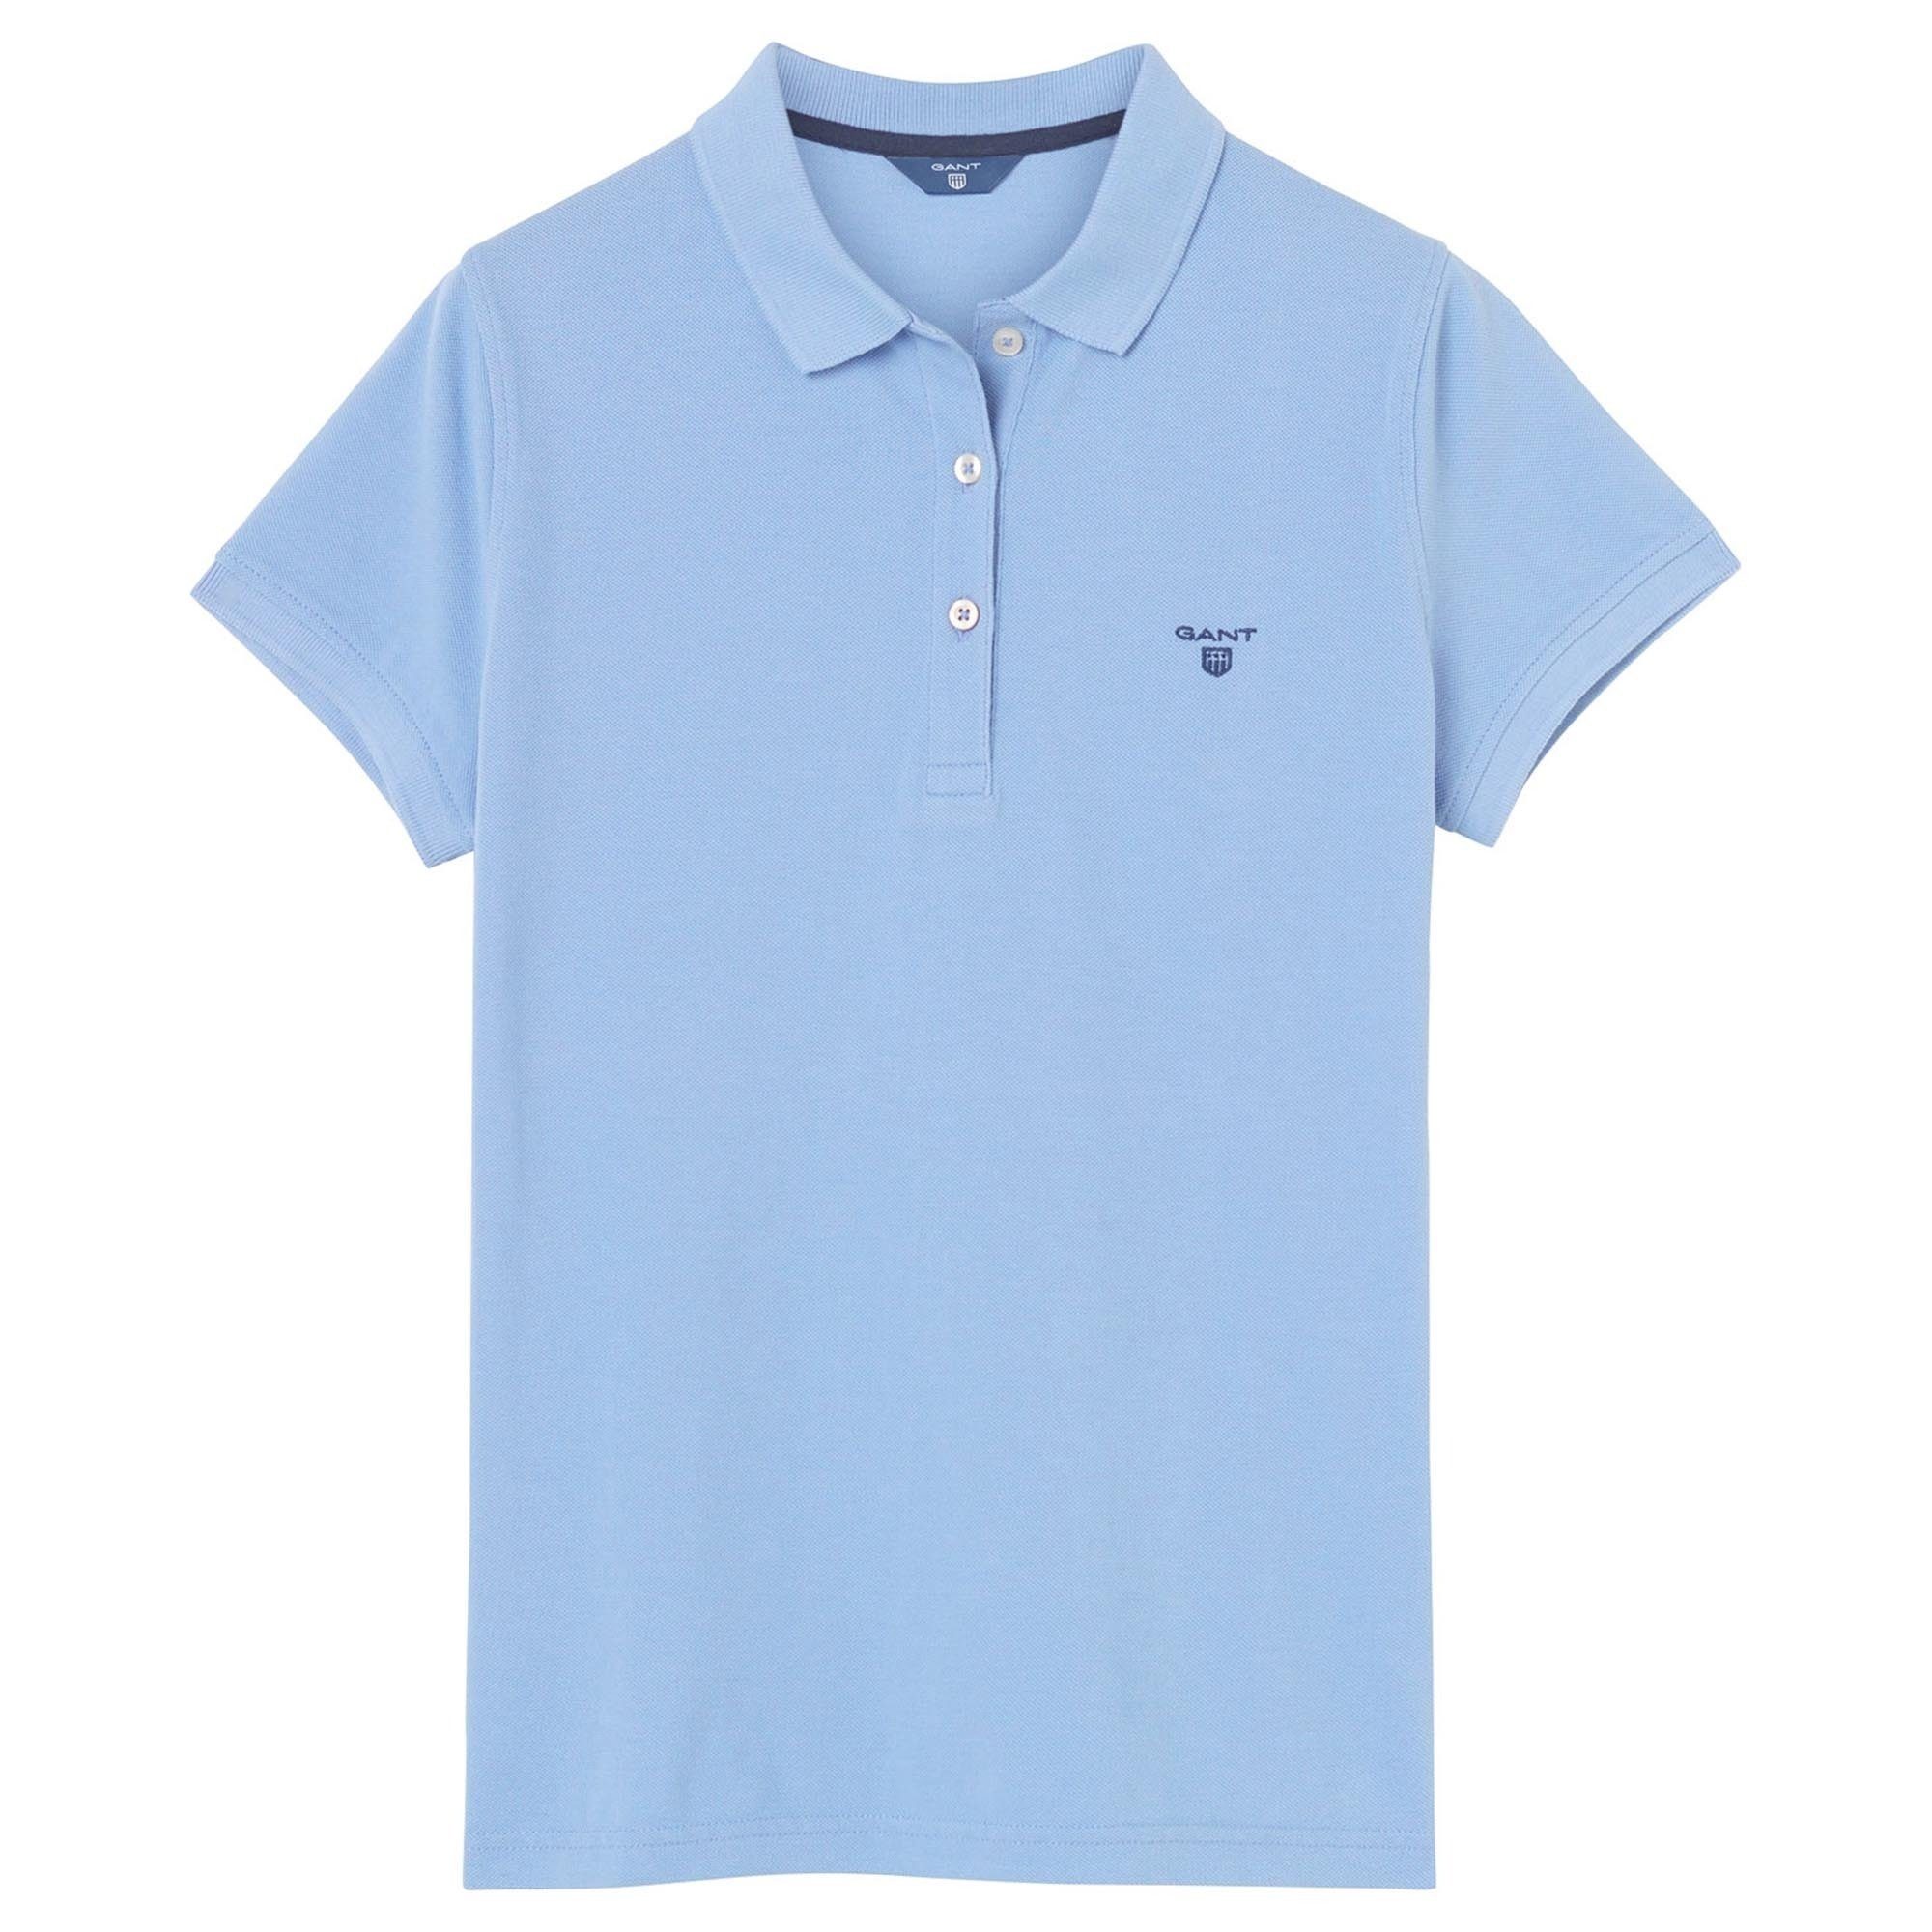 Pique, Blau - Damen (Gentle Poloshirt Halbarm Blue) Summer T-Shirt Gant MD.